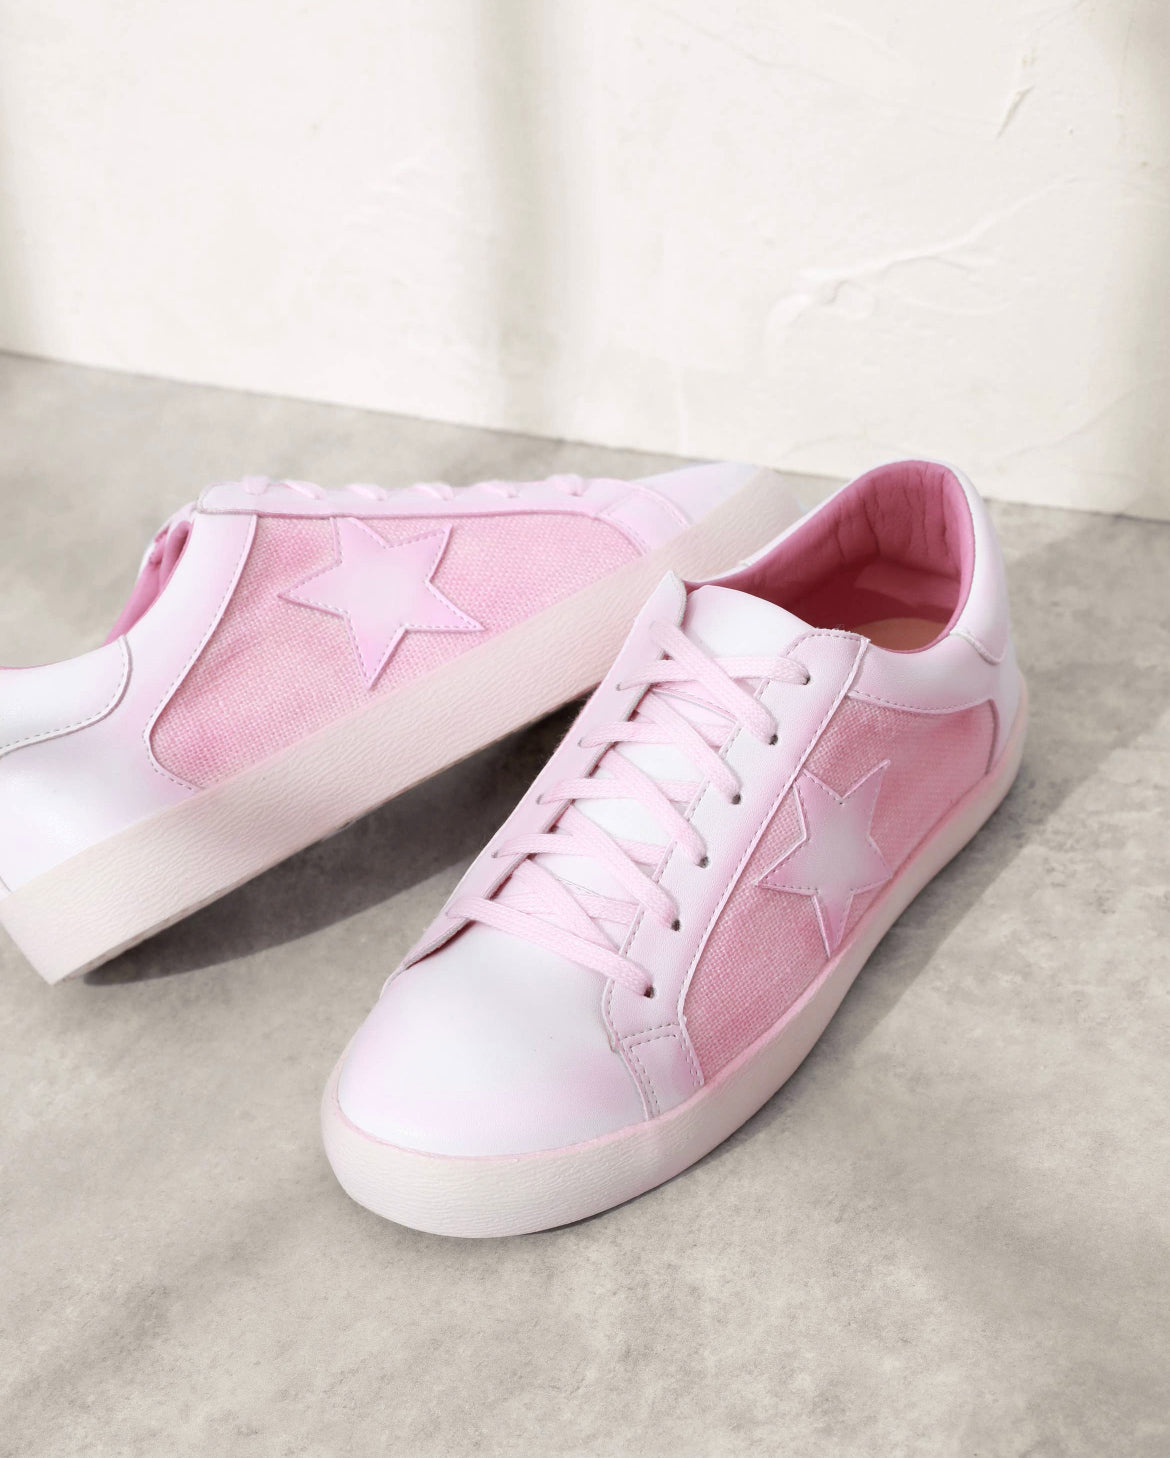 The Sandy Pink Tennis Shoe